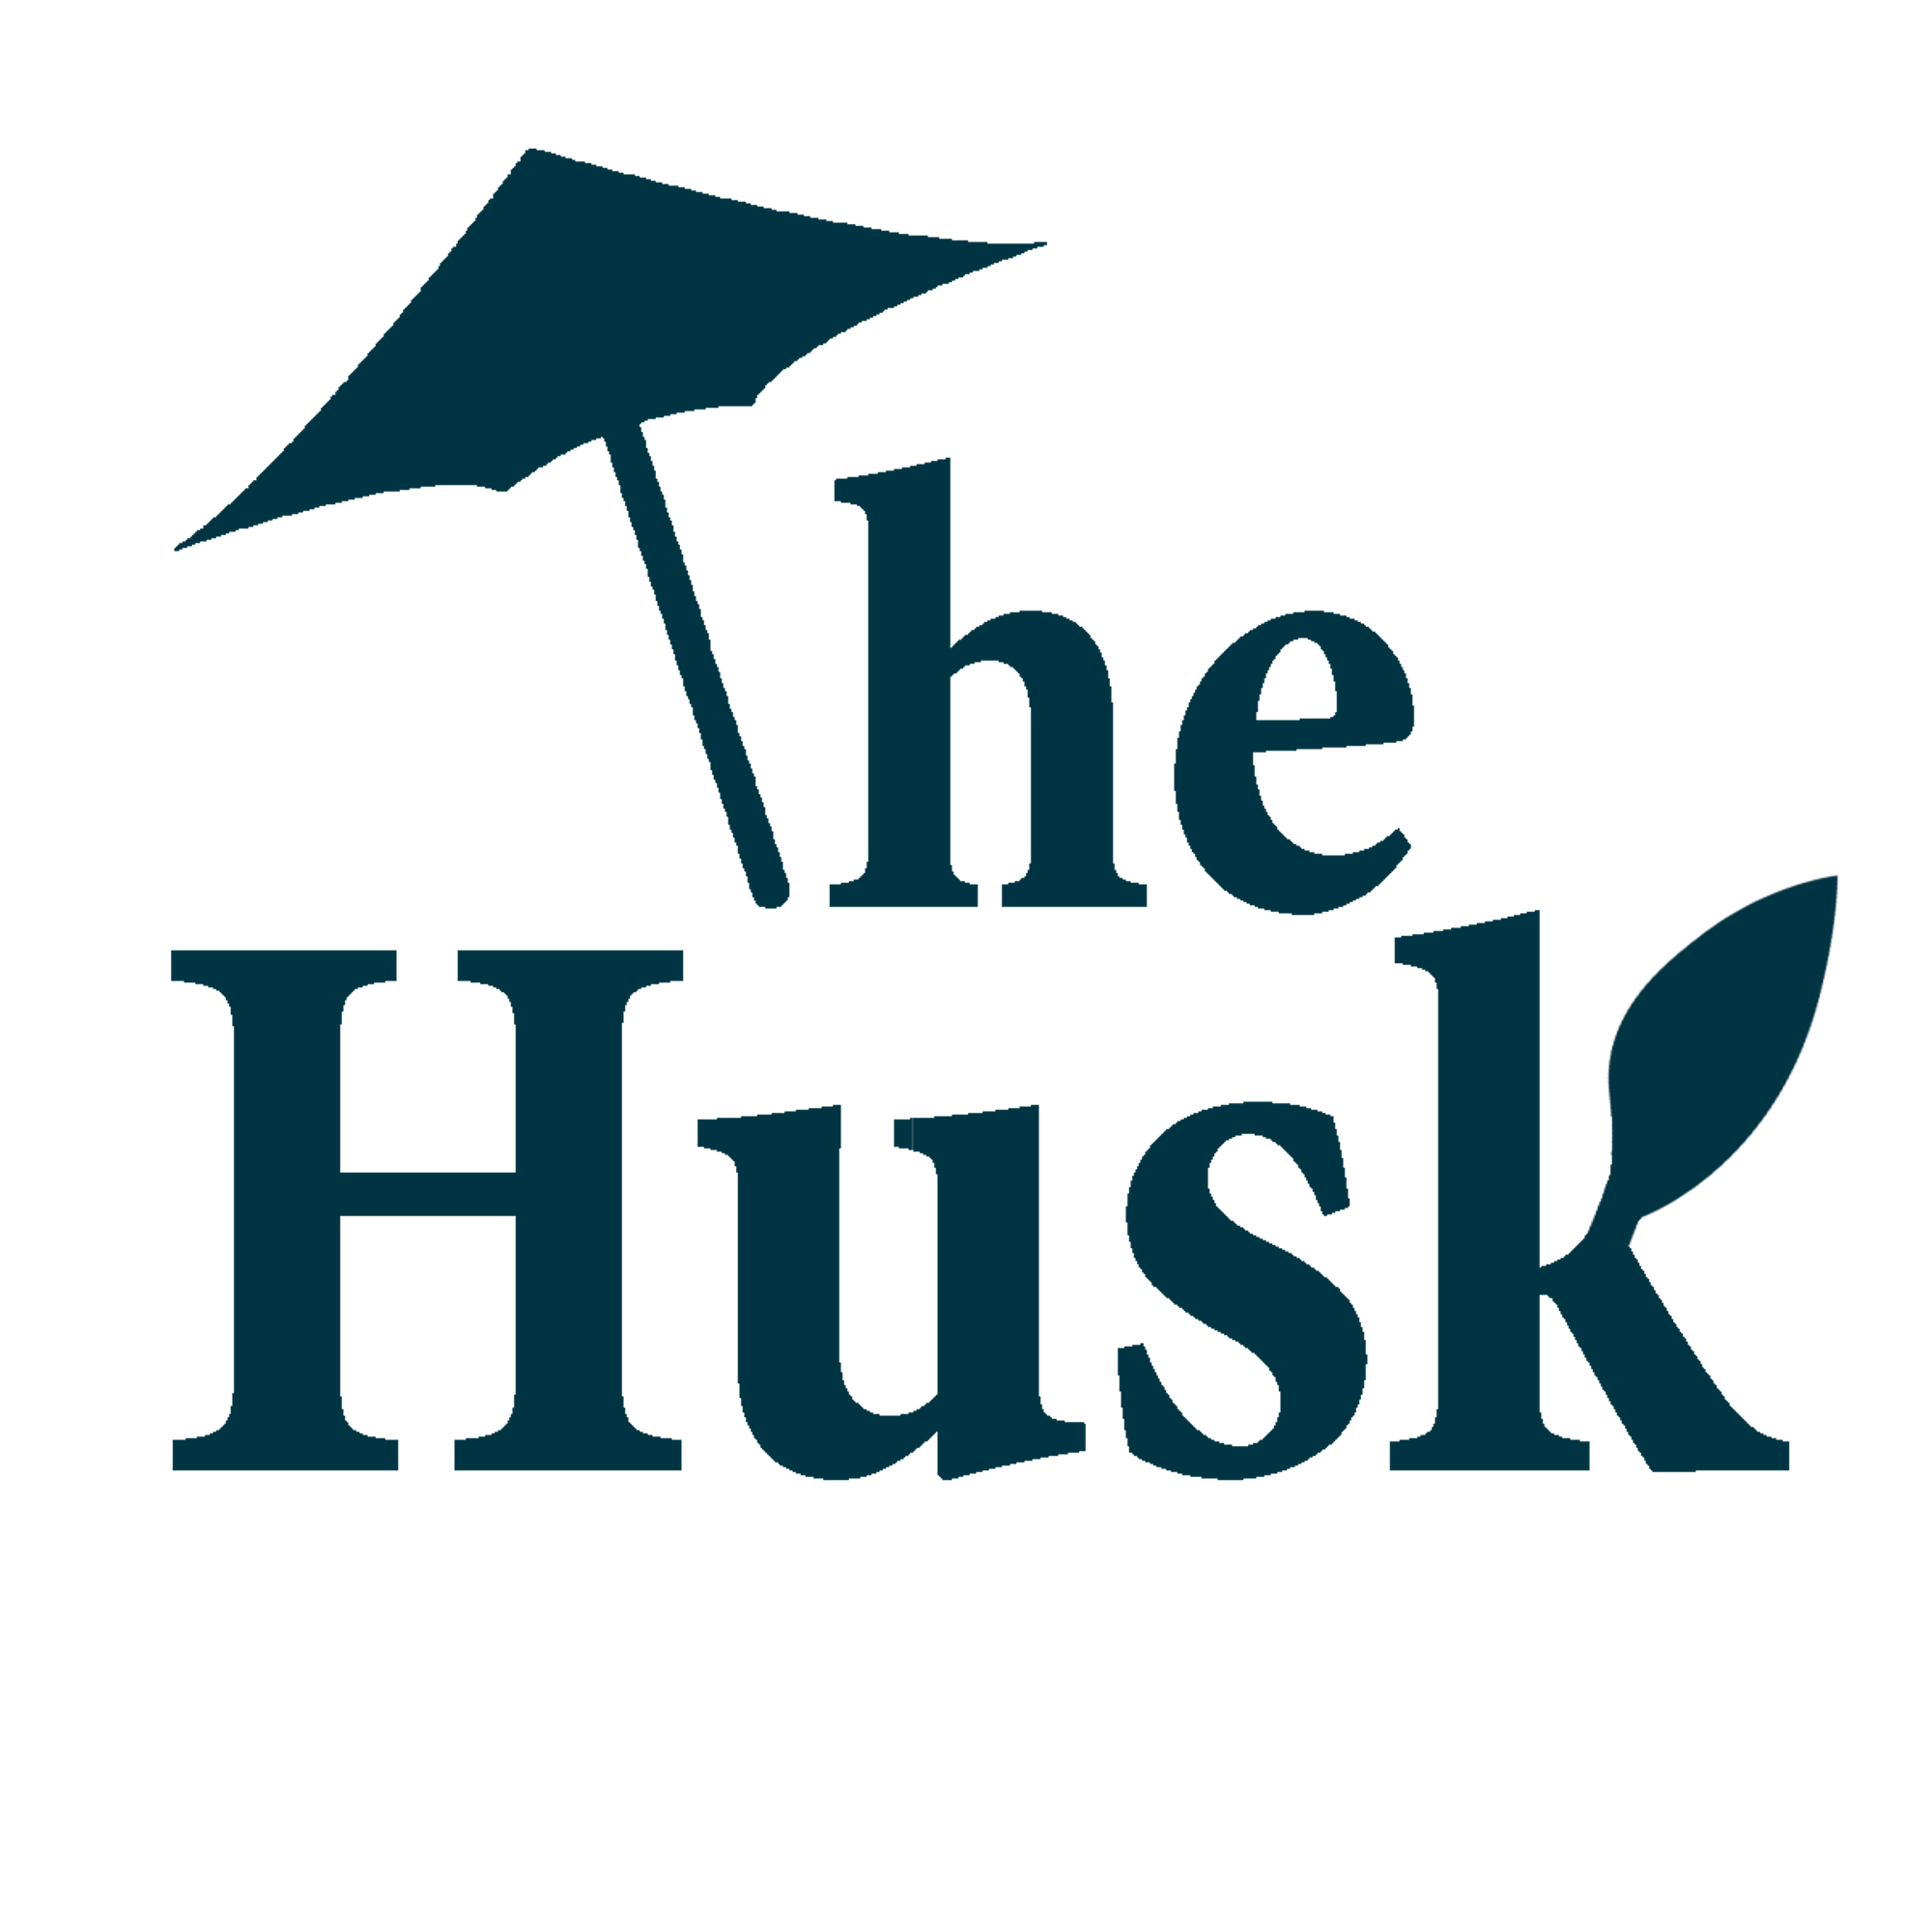 The Husk